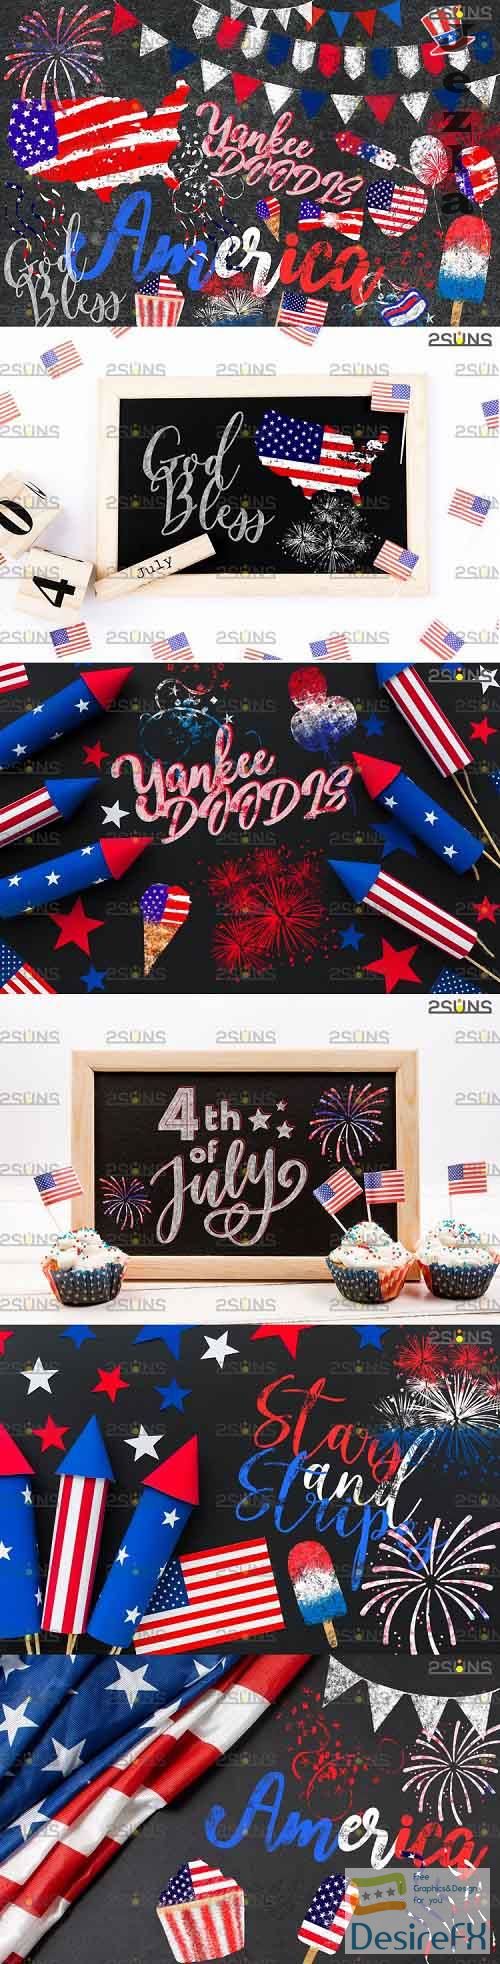 Chalk art overlay 4th of July, Photoshop overlay - 617062